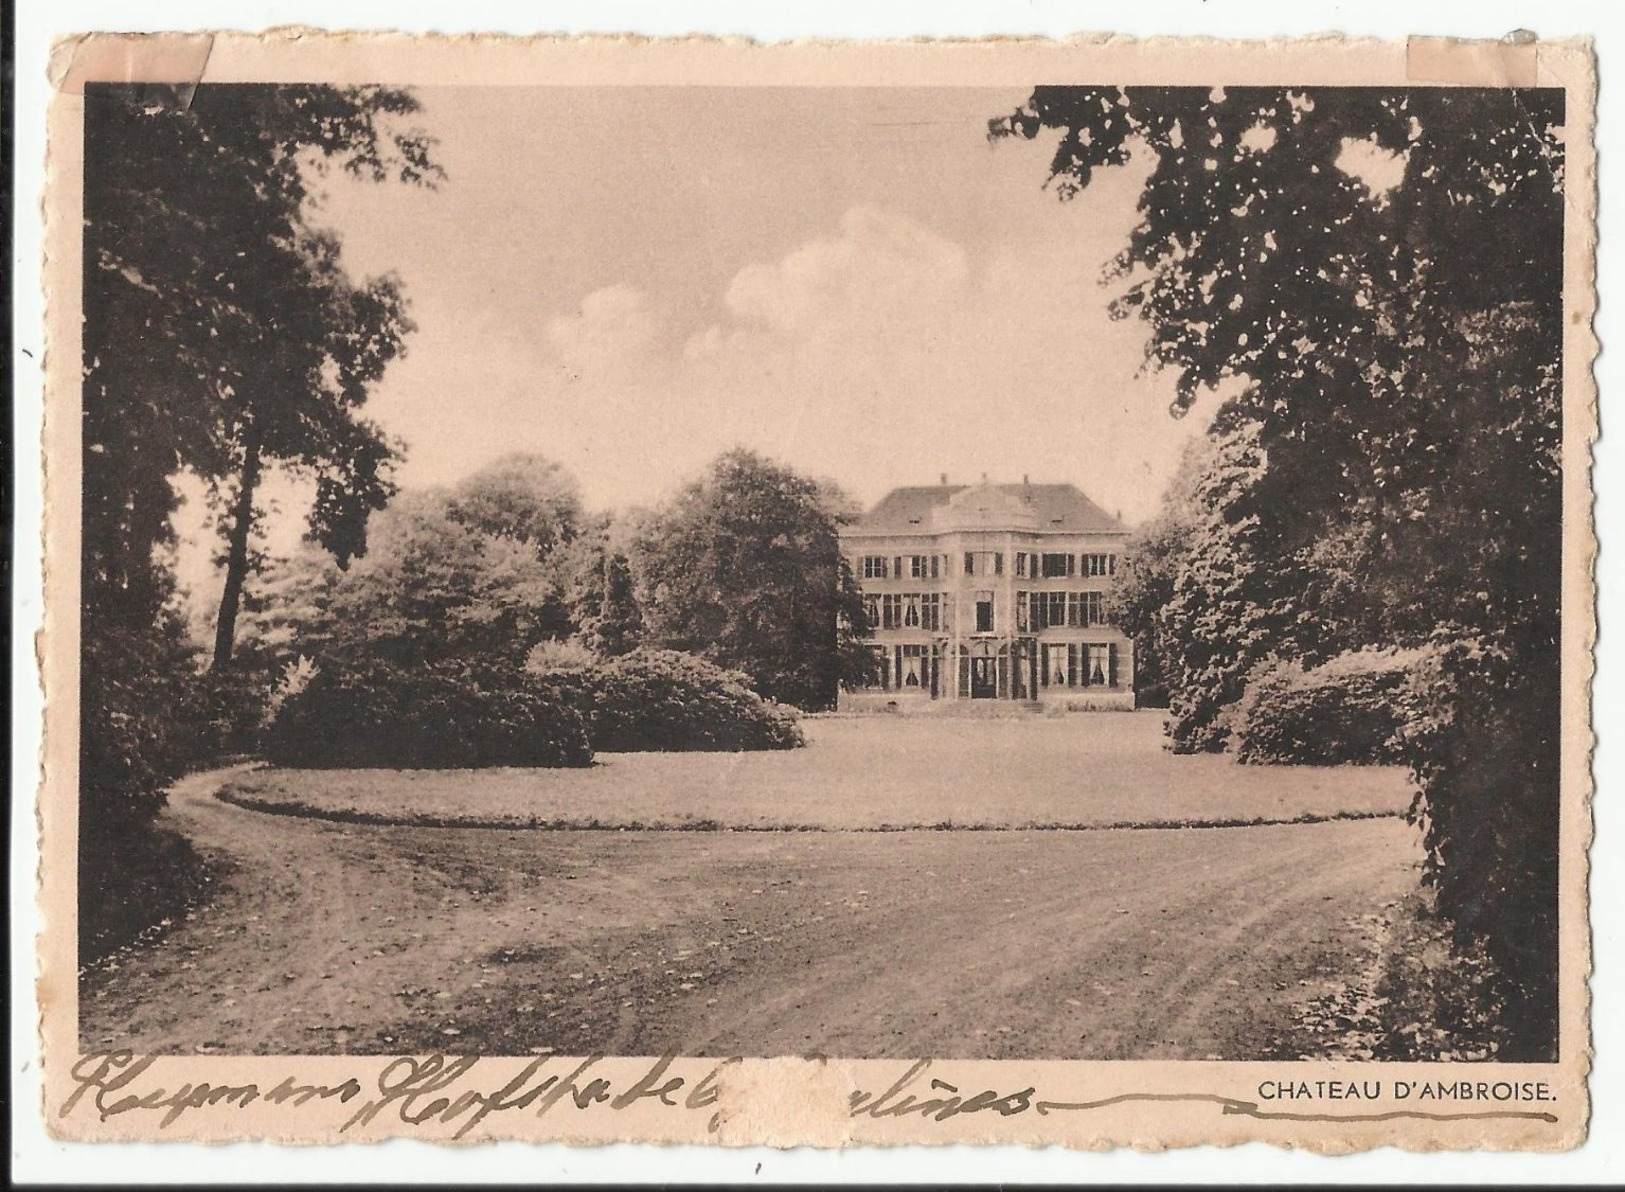 HOSTADe Château D'AMBROISE Famille VERHAEGHE De NAEYER - Zemst